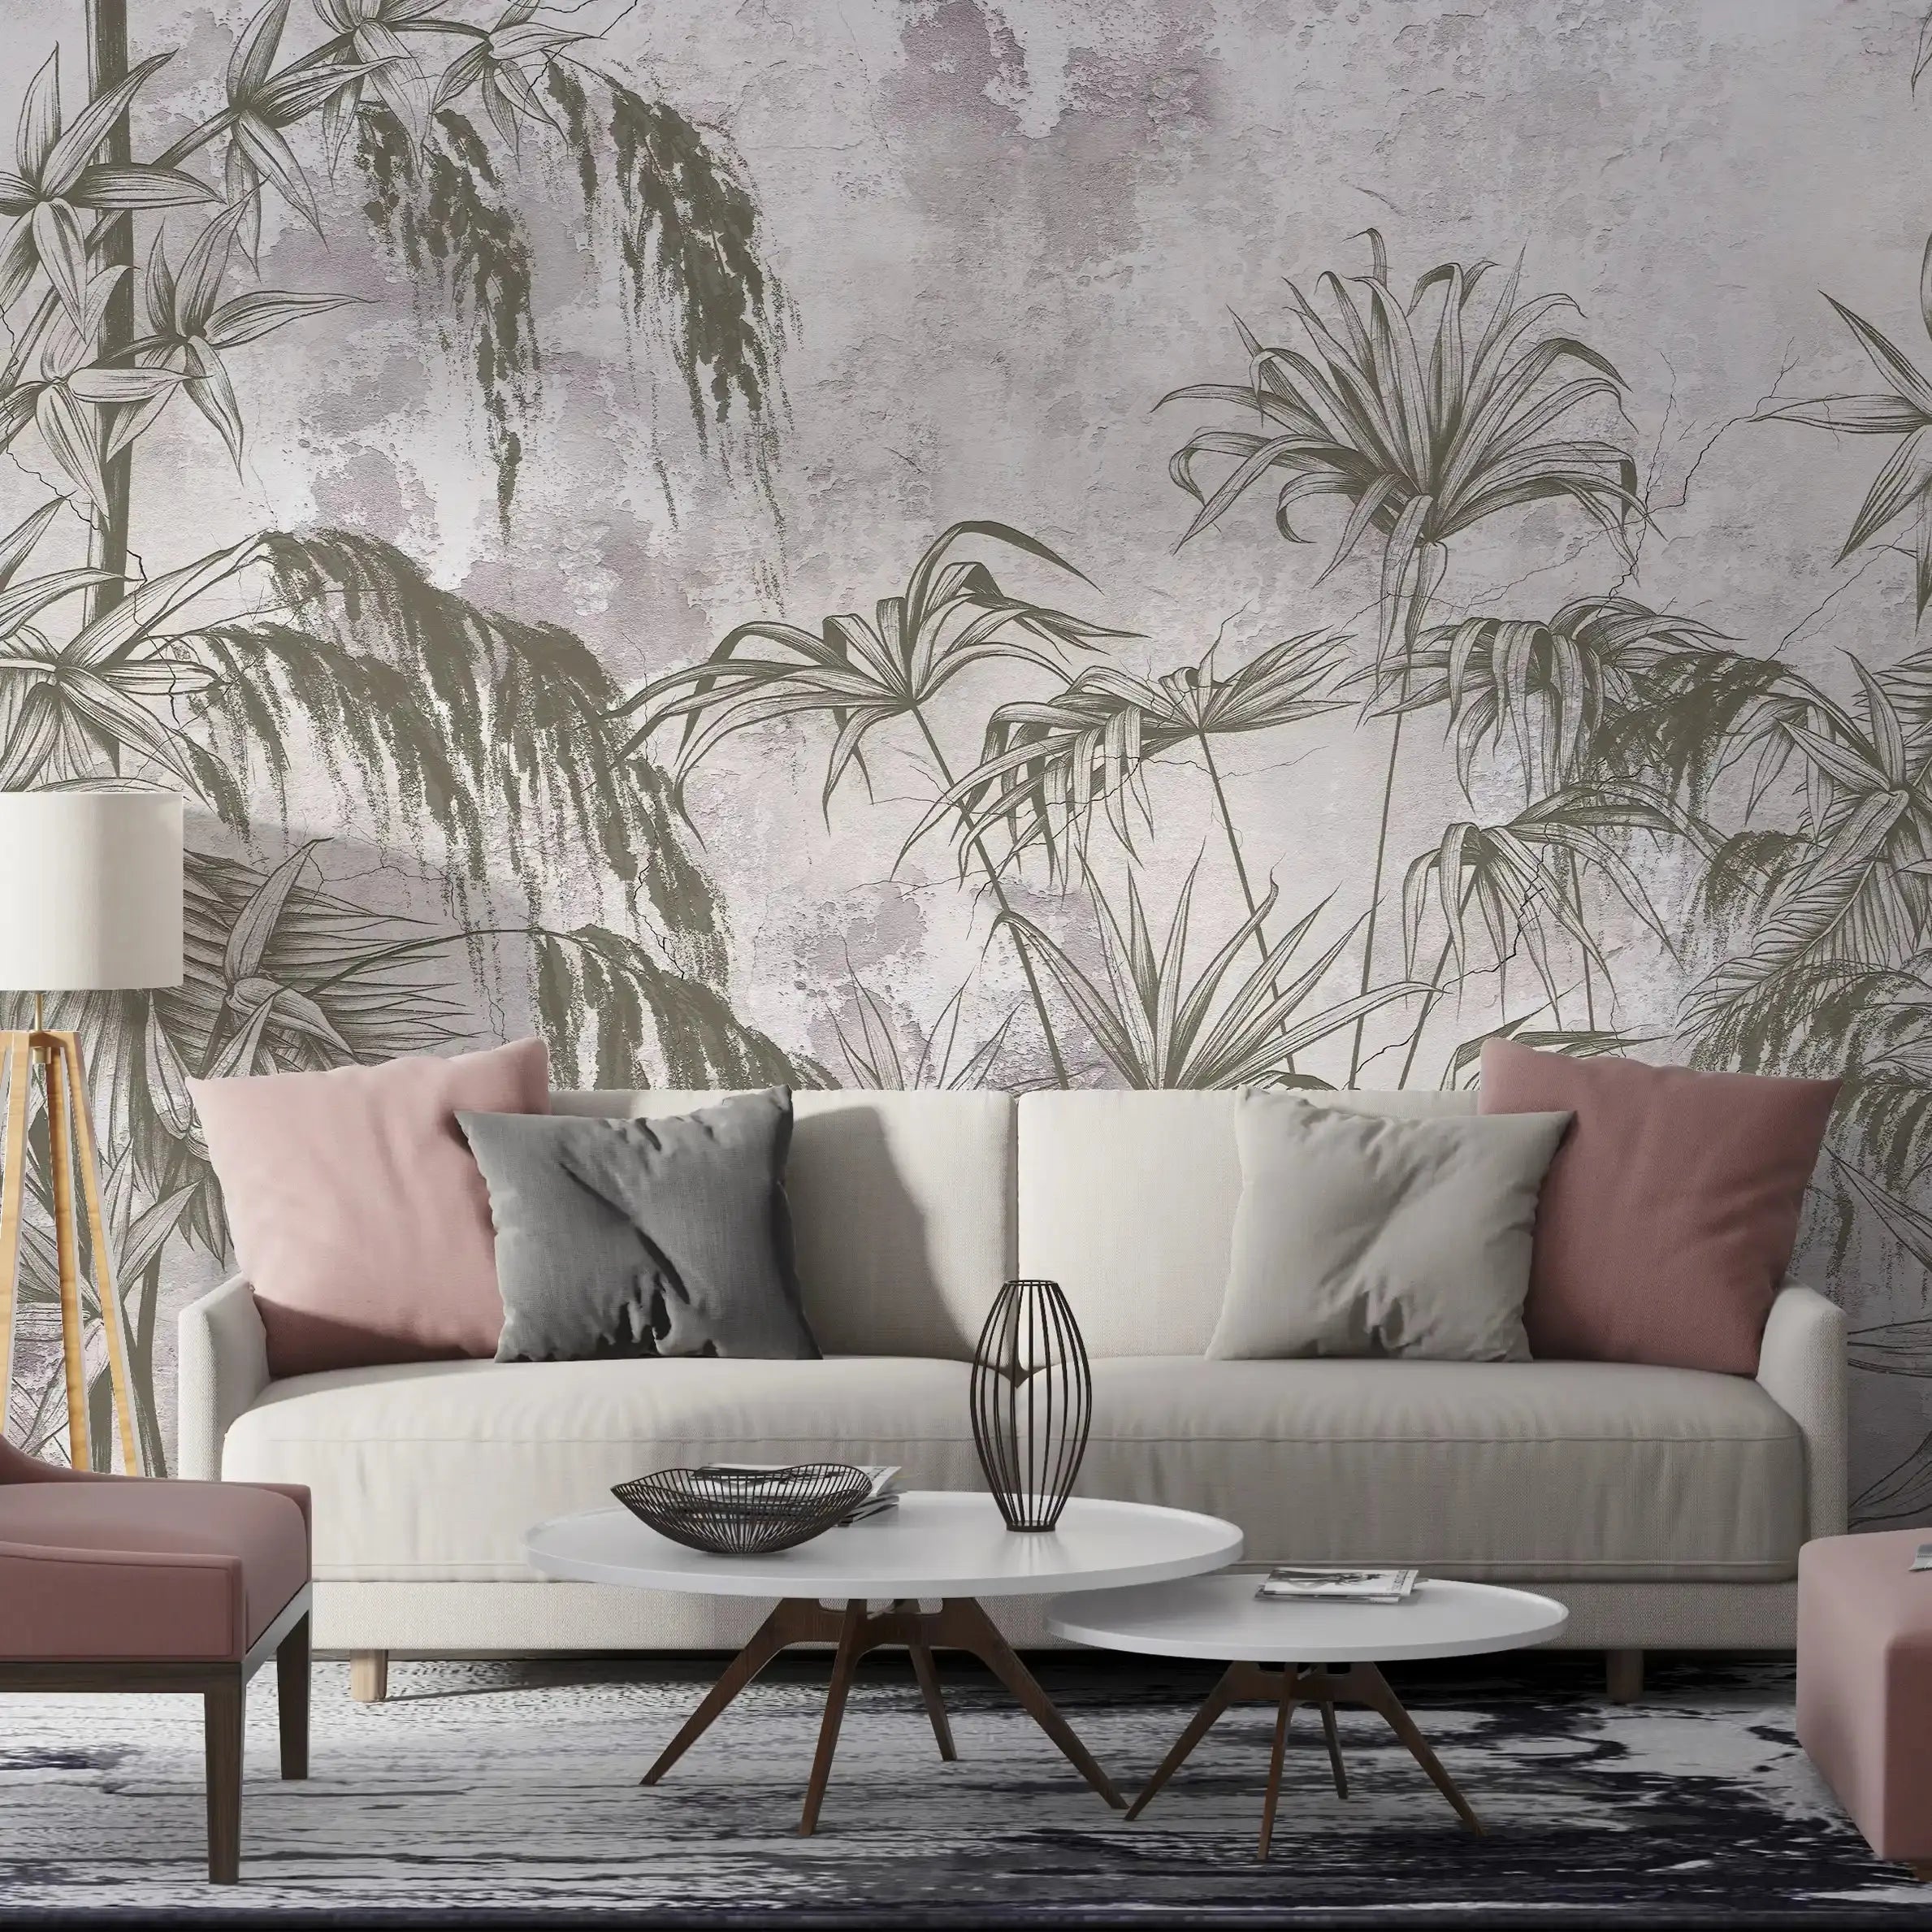 3001-E / Botanical Peel and Stick Wallpaper - Wild Floral, Tropical Leaf Wall Mural, Self Adhesive & Removable Design for Room, Shelf, Drawer Liner - Artevella